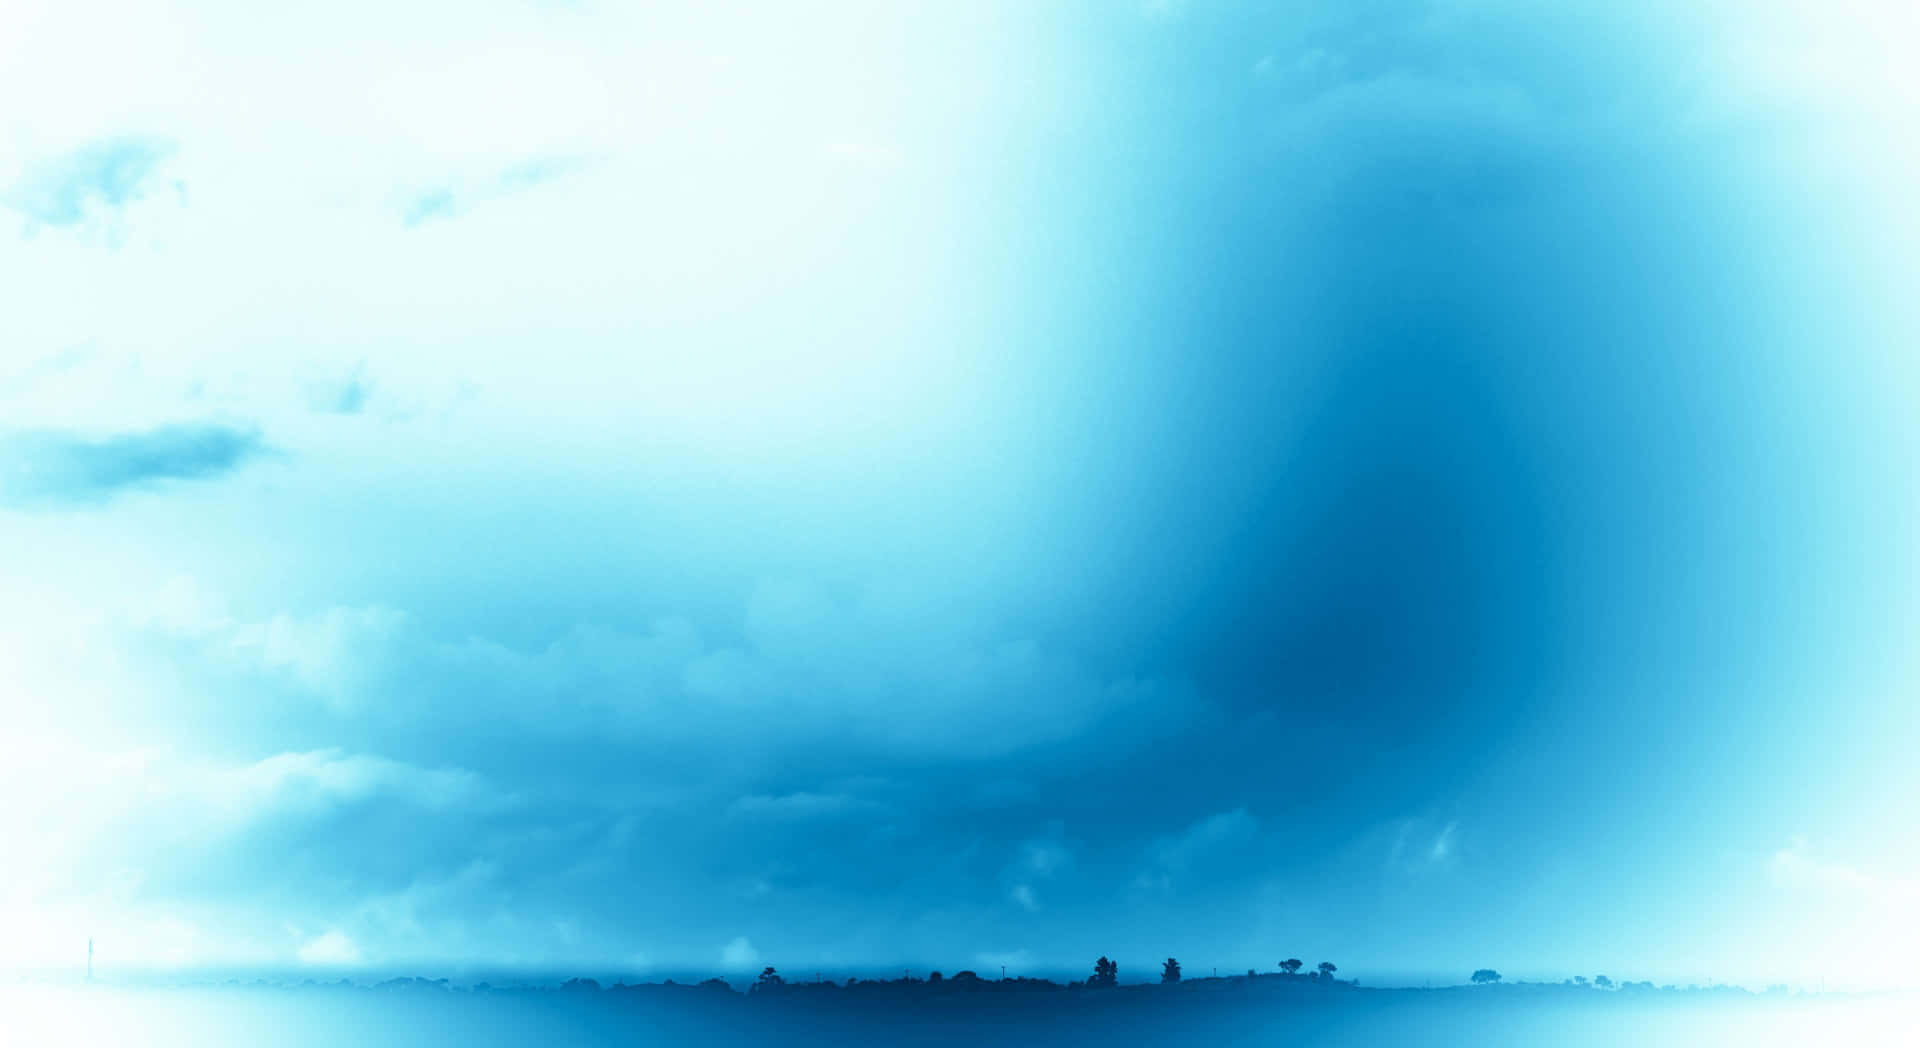 "The majestic beauty of a stunning blue horizon" Wallpaper